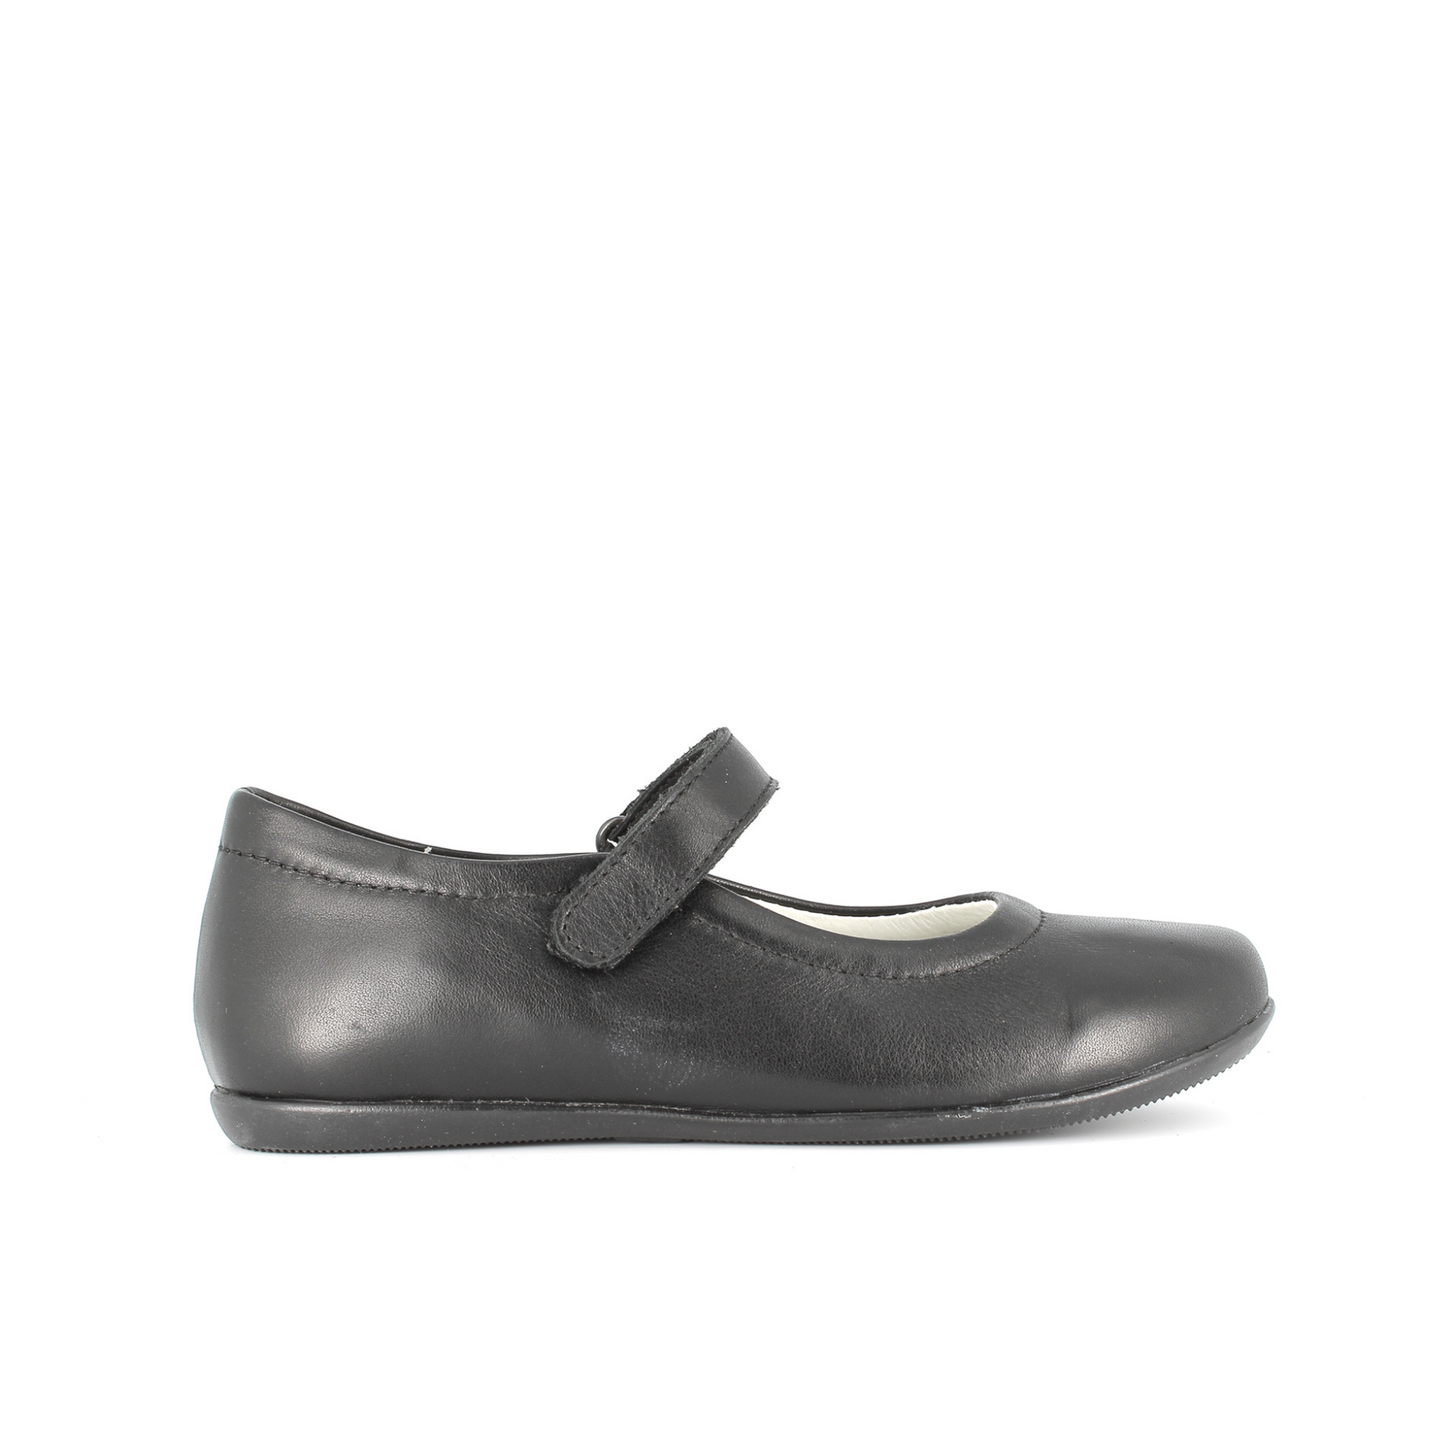 Zura Black Leather Ballet Flat Girls School Shoe